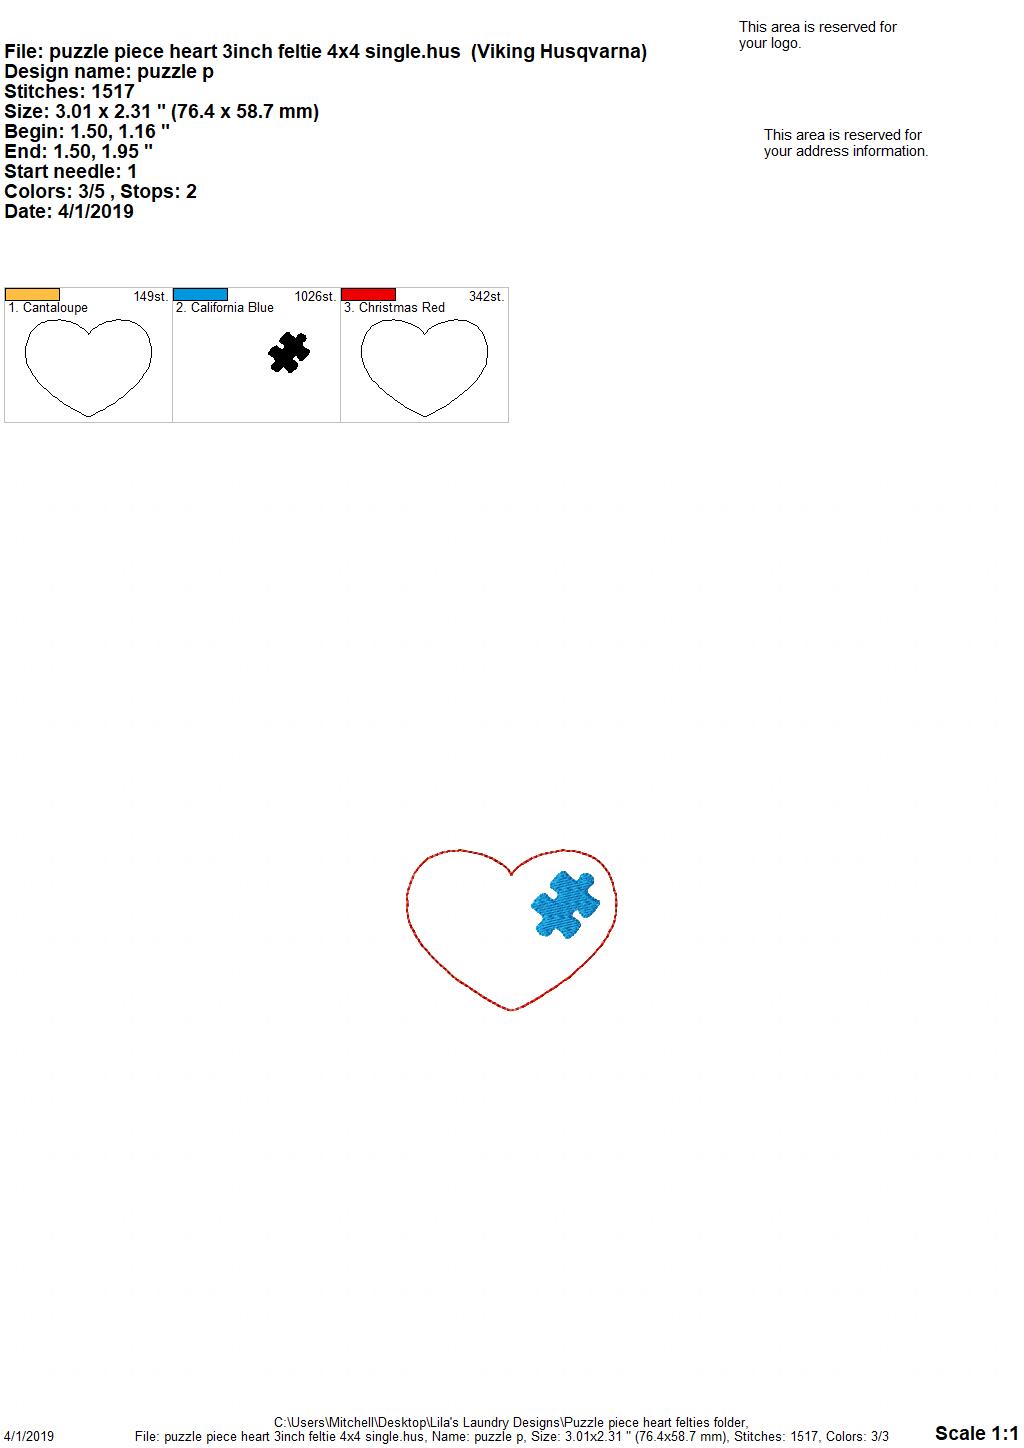 Puzzle Piece Heart Felties - 3 sizes- Digital Embroidery Design